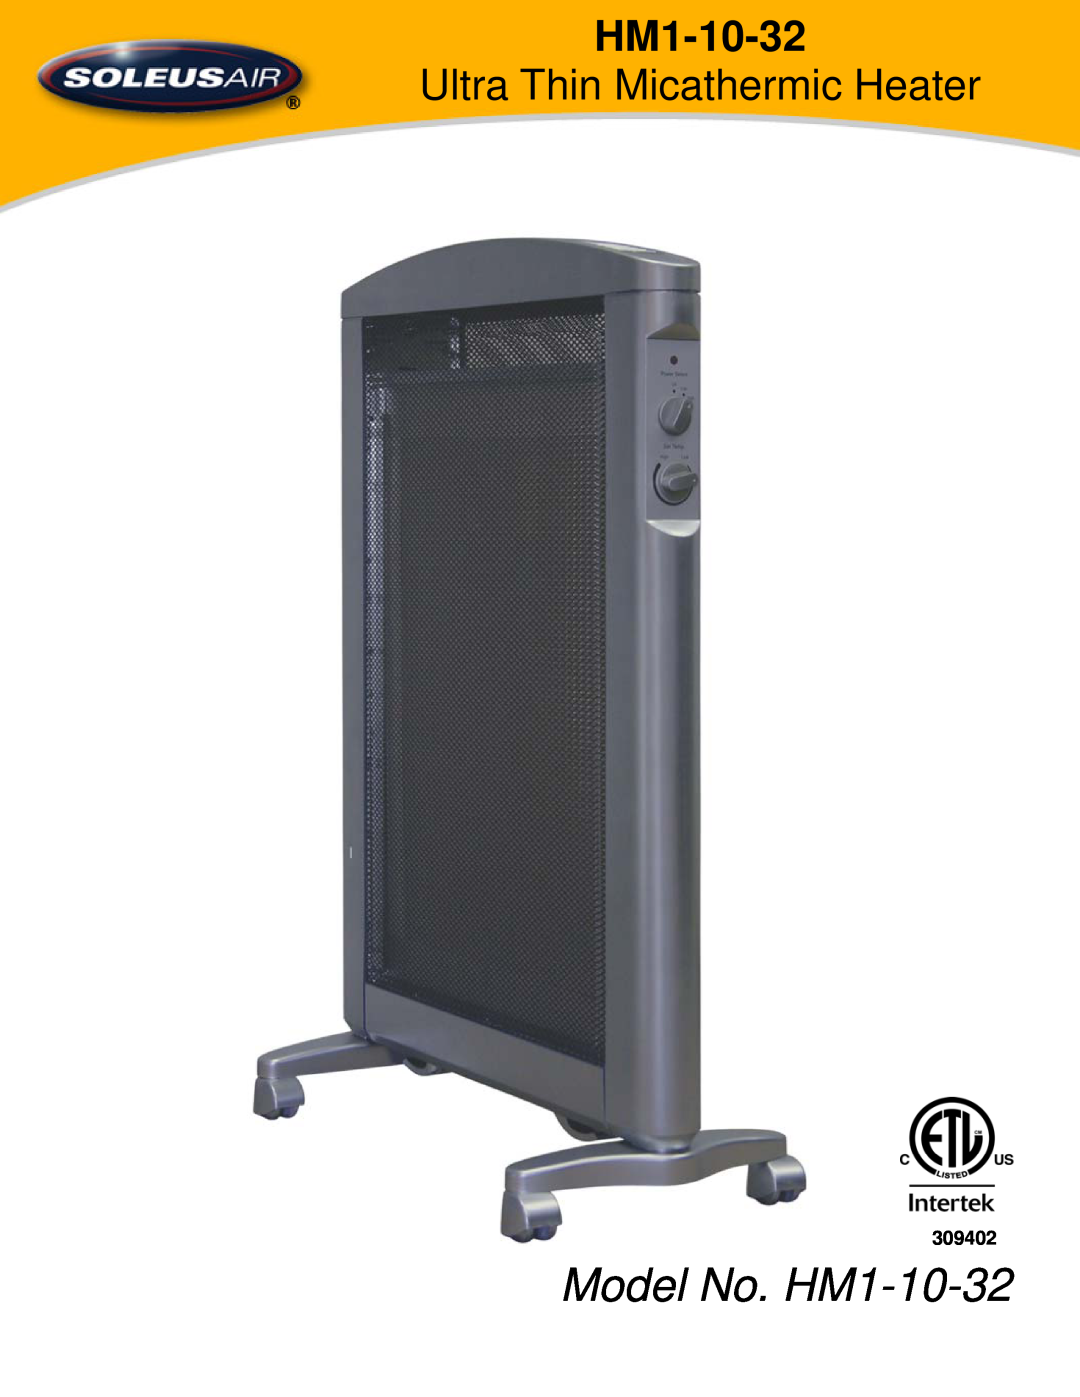 Soleus Air manual Model No. HM1-10-32, Ultra Thin Micathermic Heater, 309402 